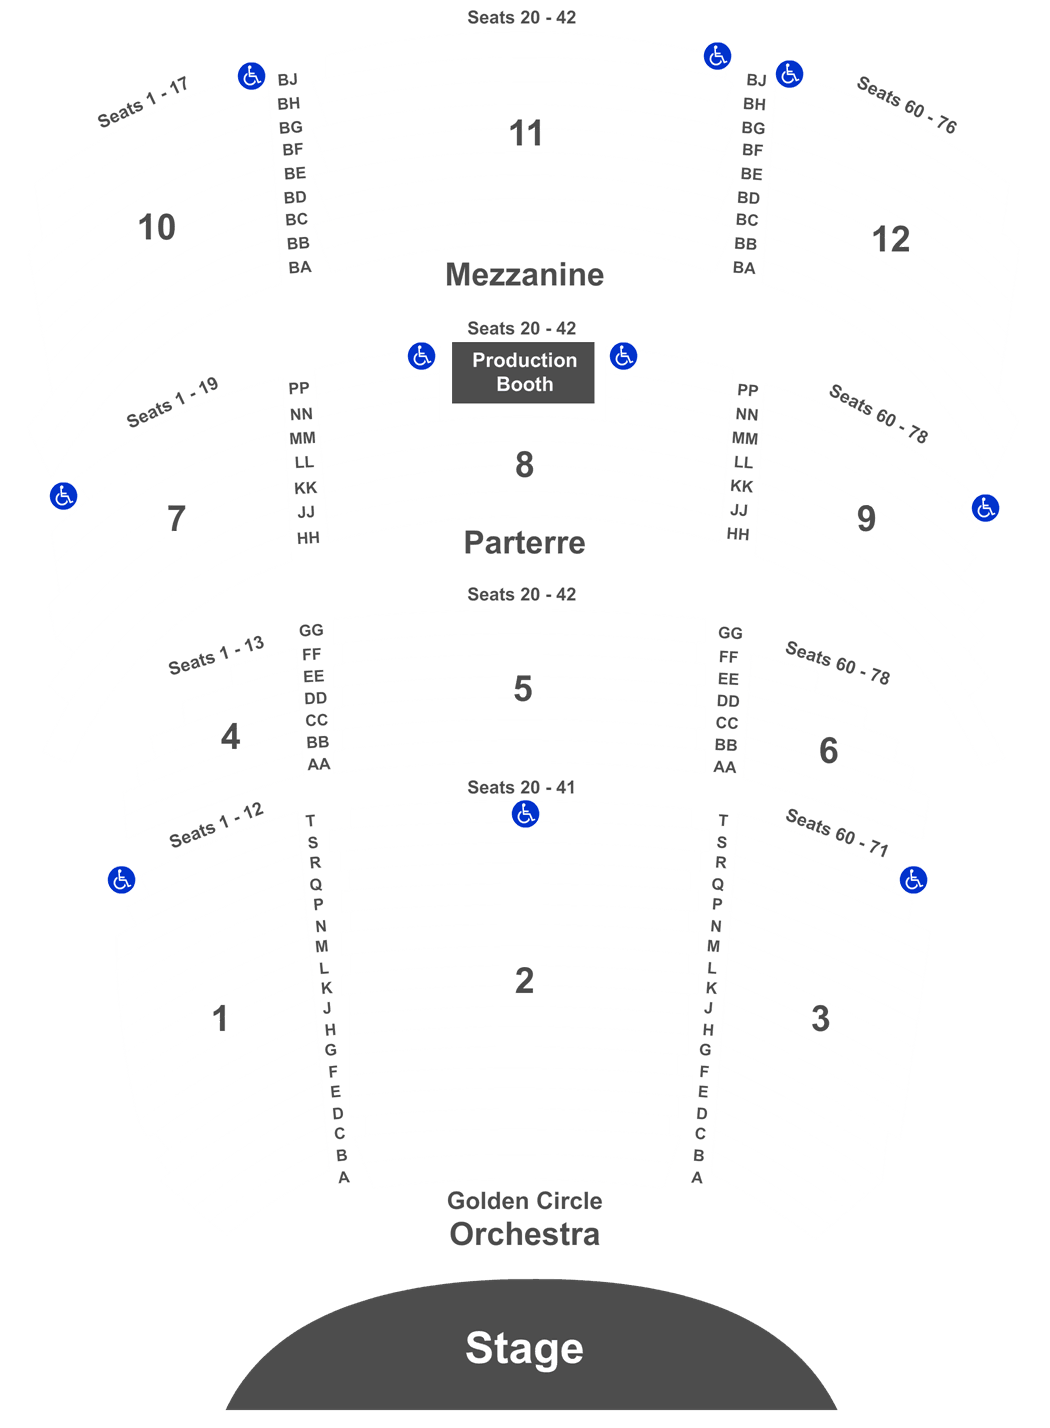 The Venetian Theatre Seating Chart